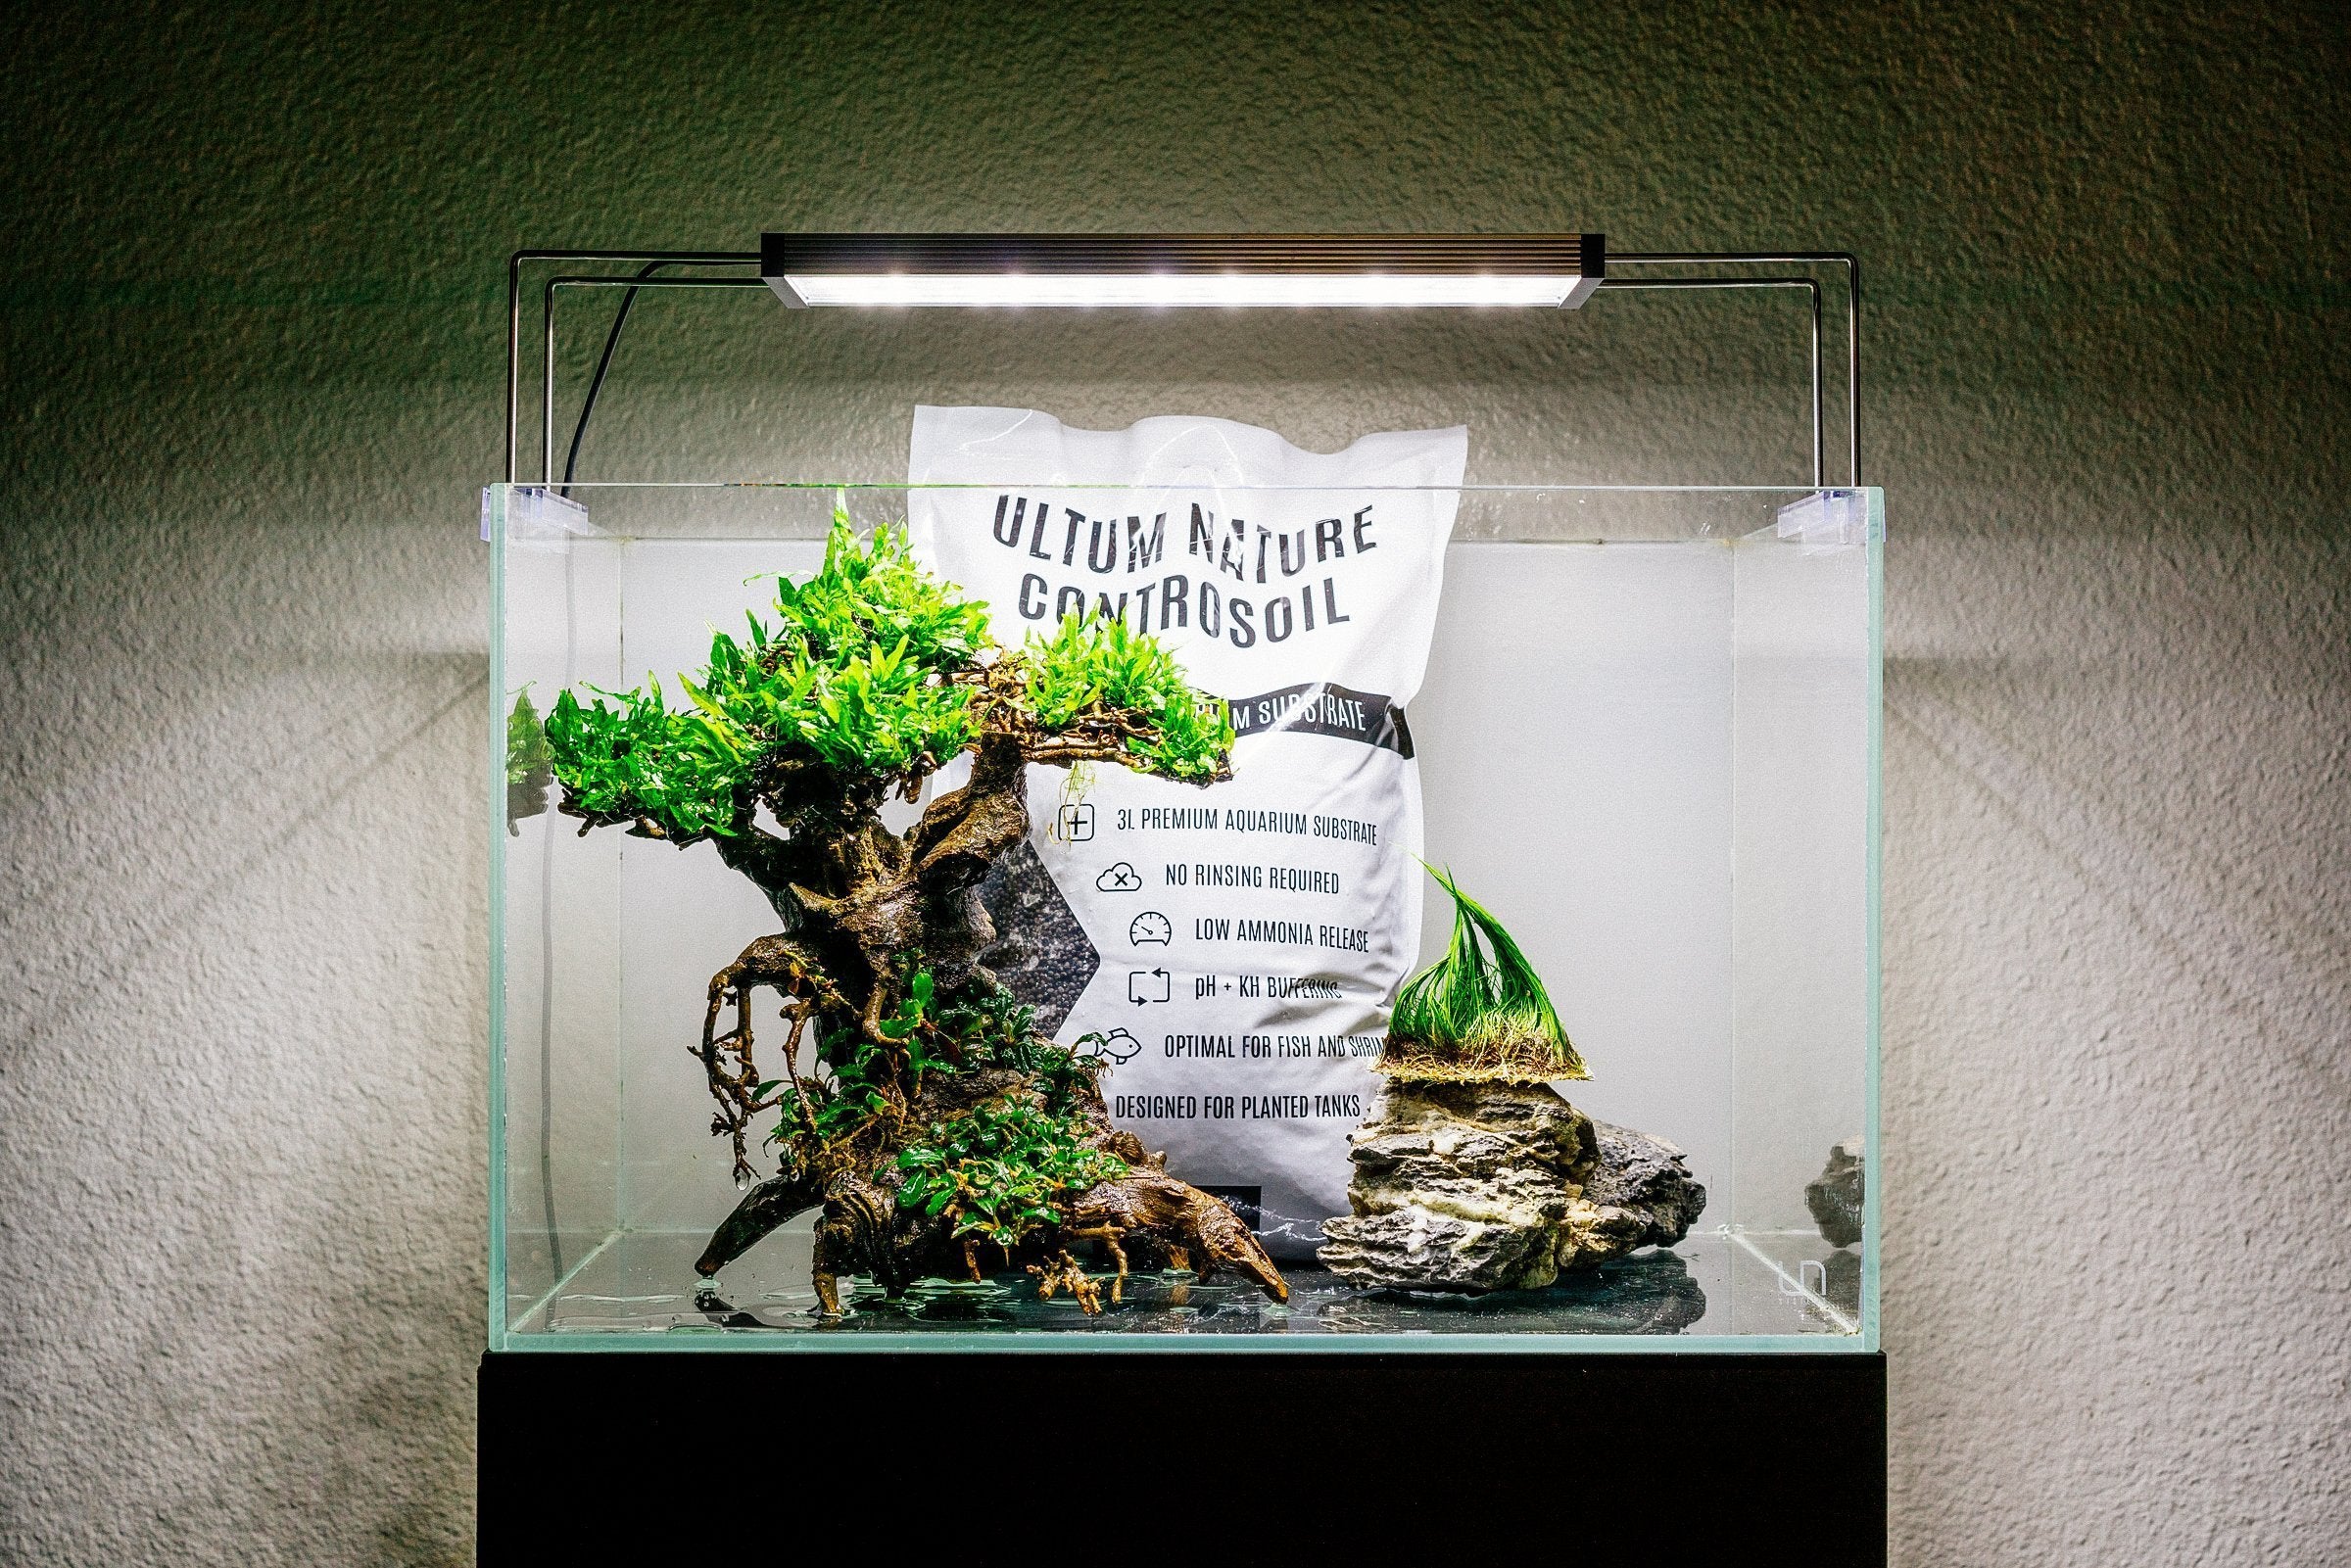 Bonsai tree with marimo moss : r/aquarium